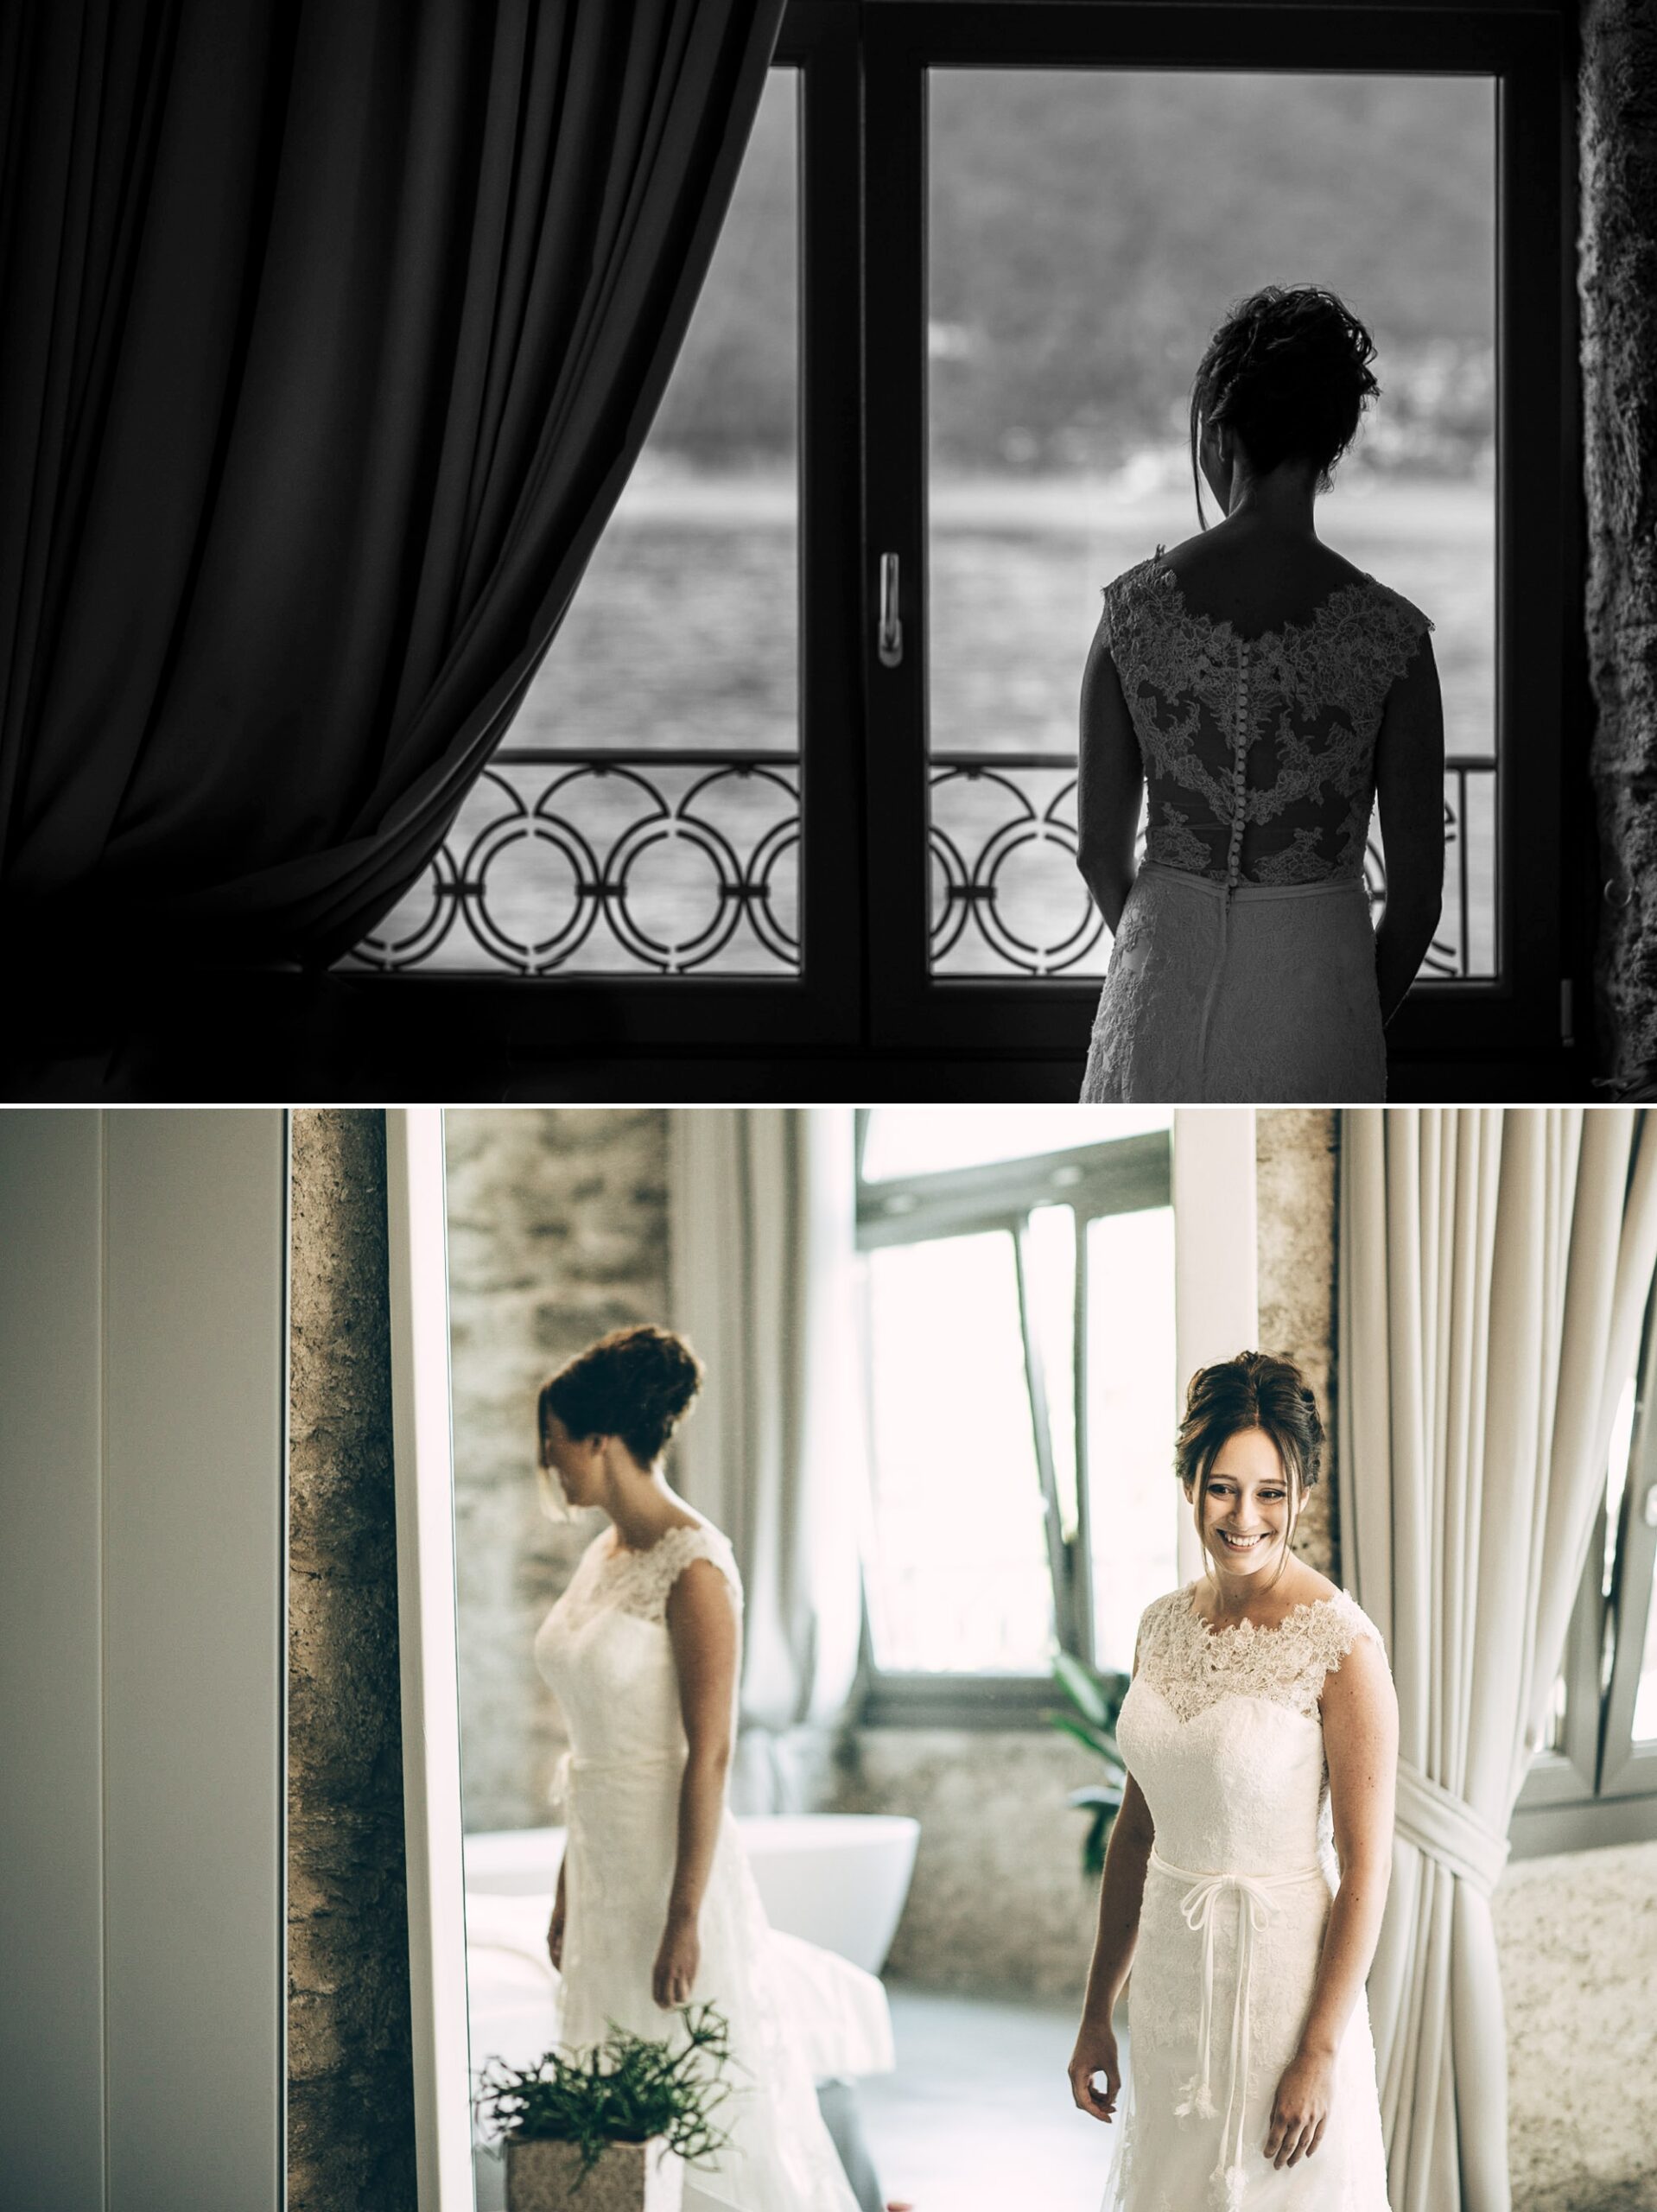 Wedding photography photos in Lake Maggiore